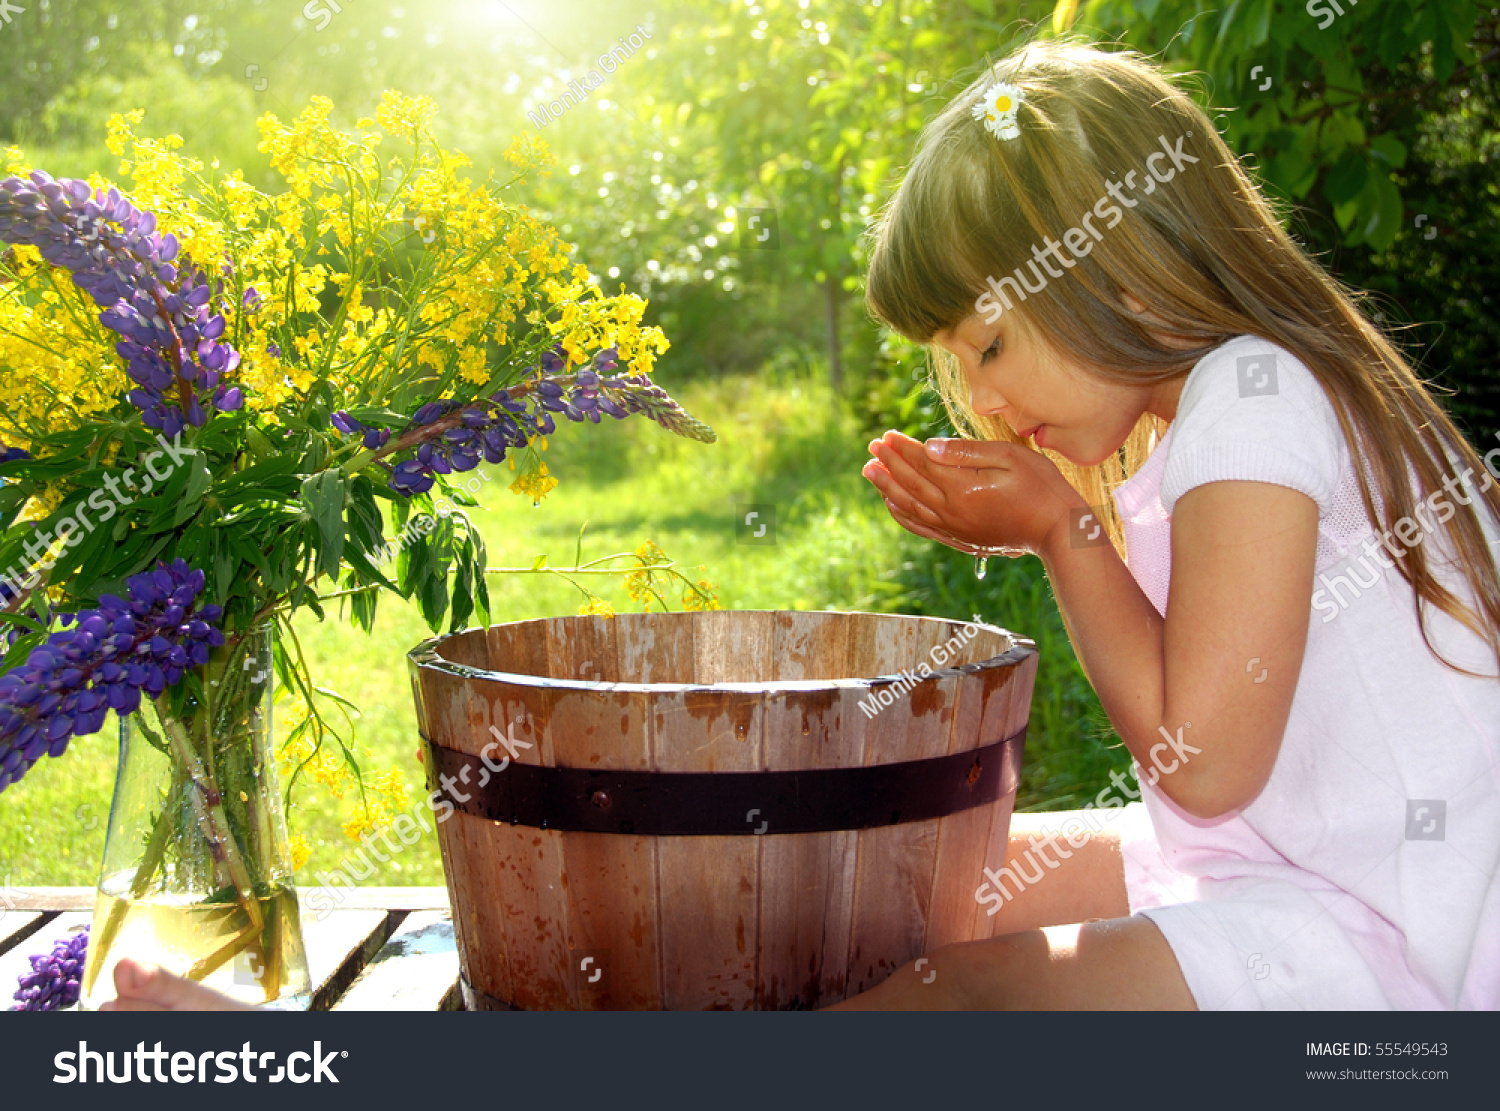 Ребенок пьет воду из колодца